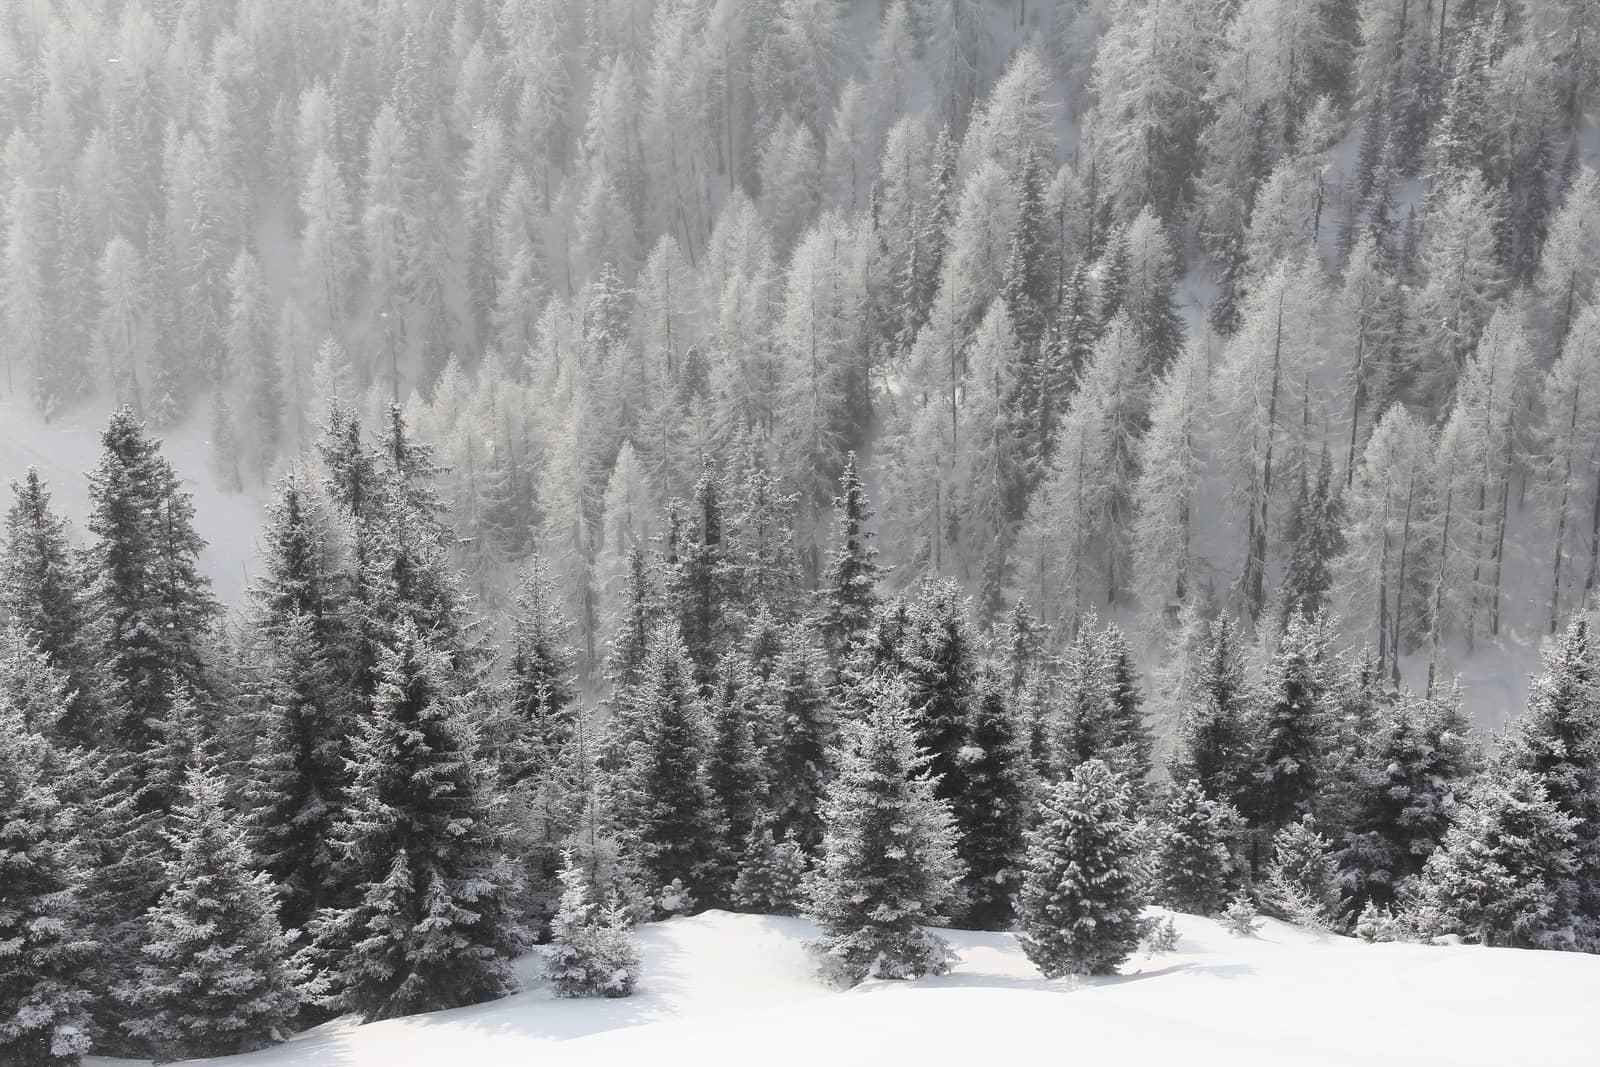 Winter mountain forest by destillat